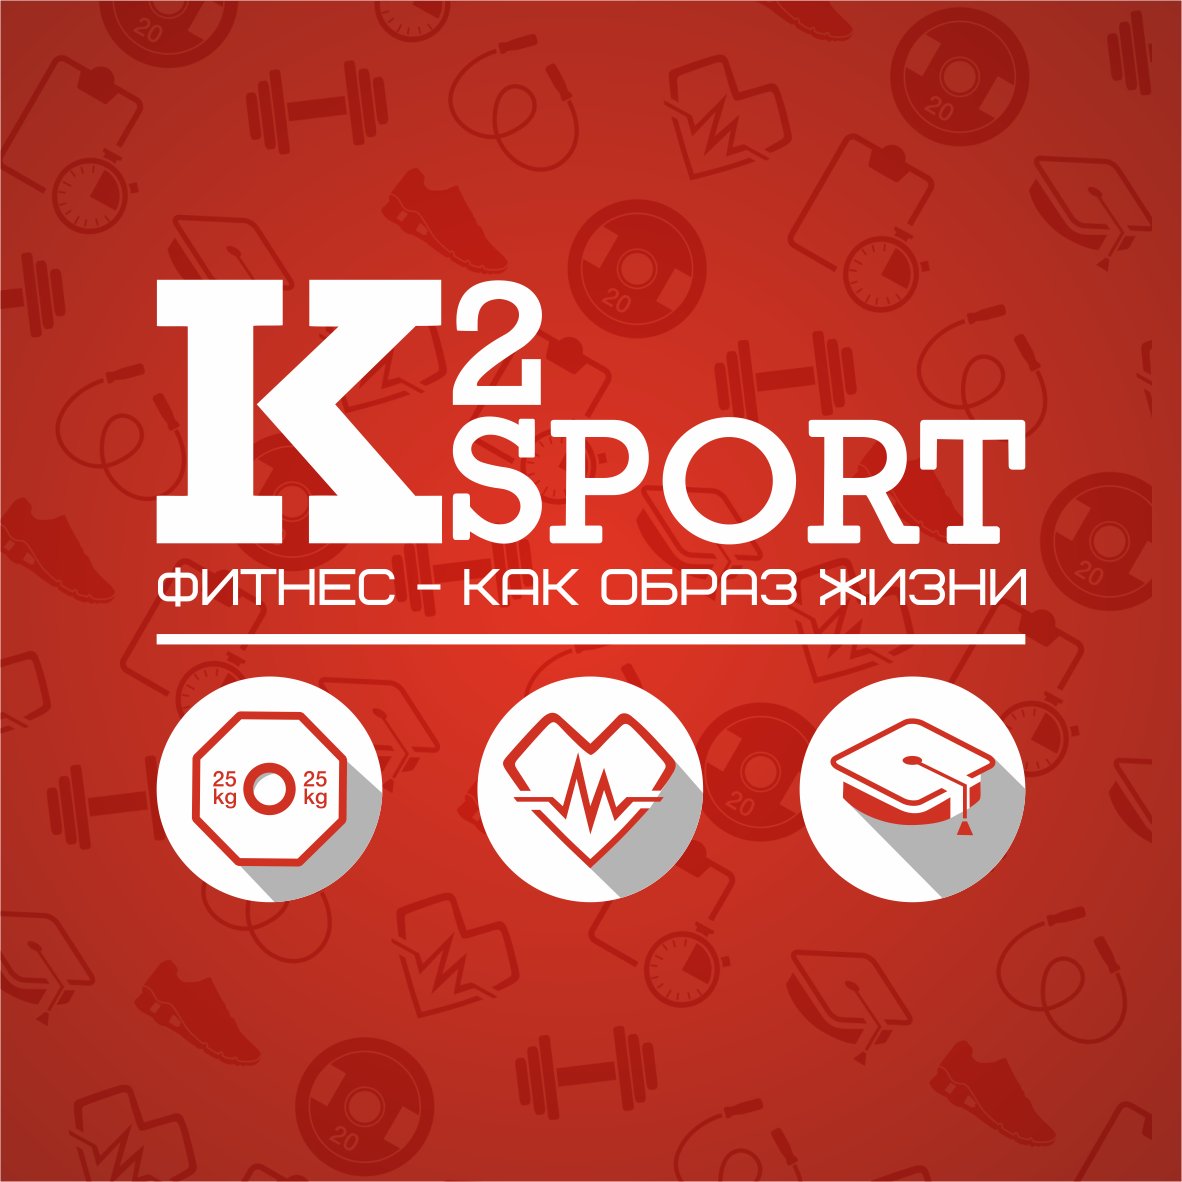 Die sport 2. Sport 2. К2 спорт Барнаул. Барнаул 2. К2 мплрт.